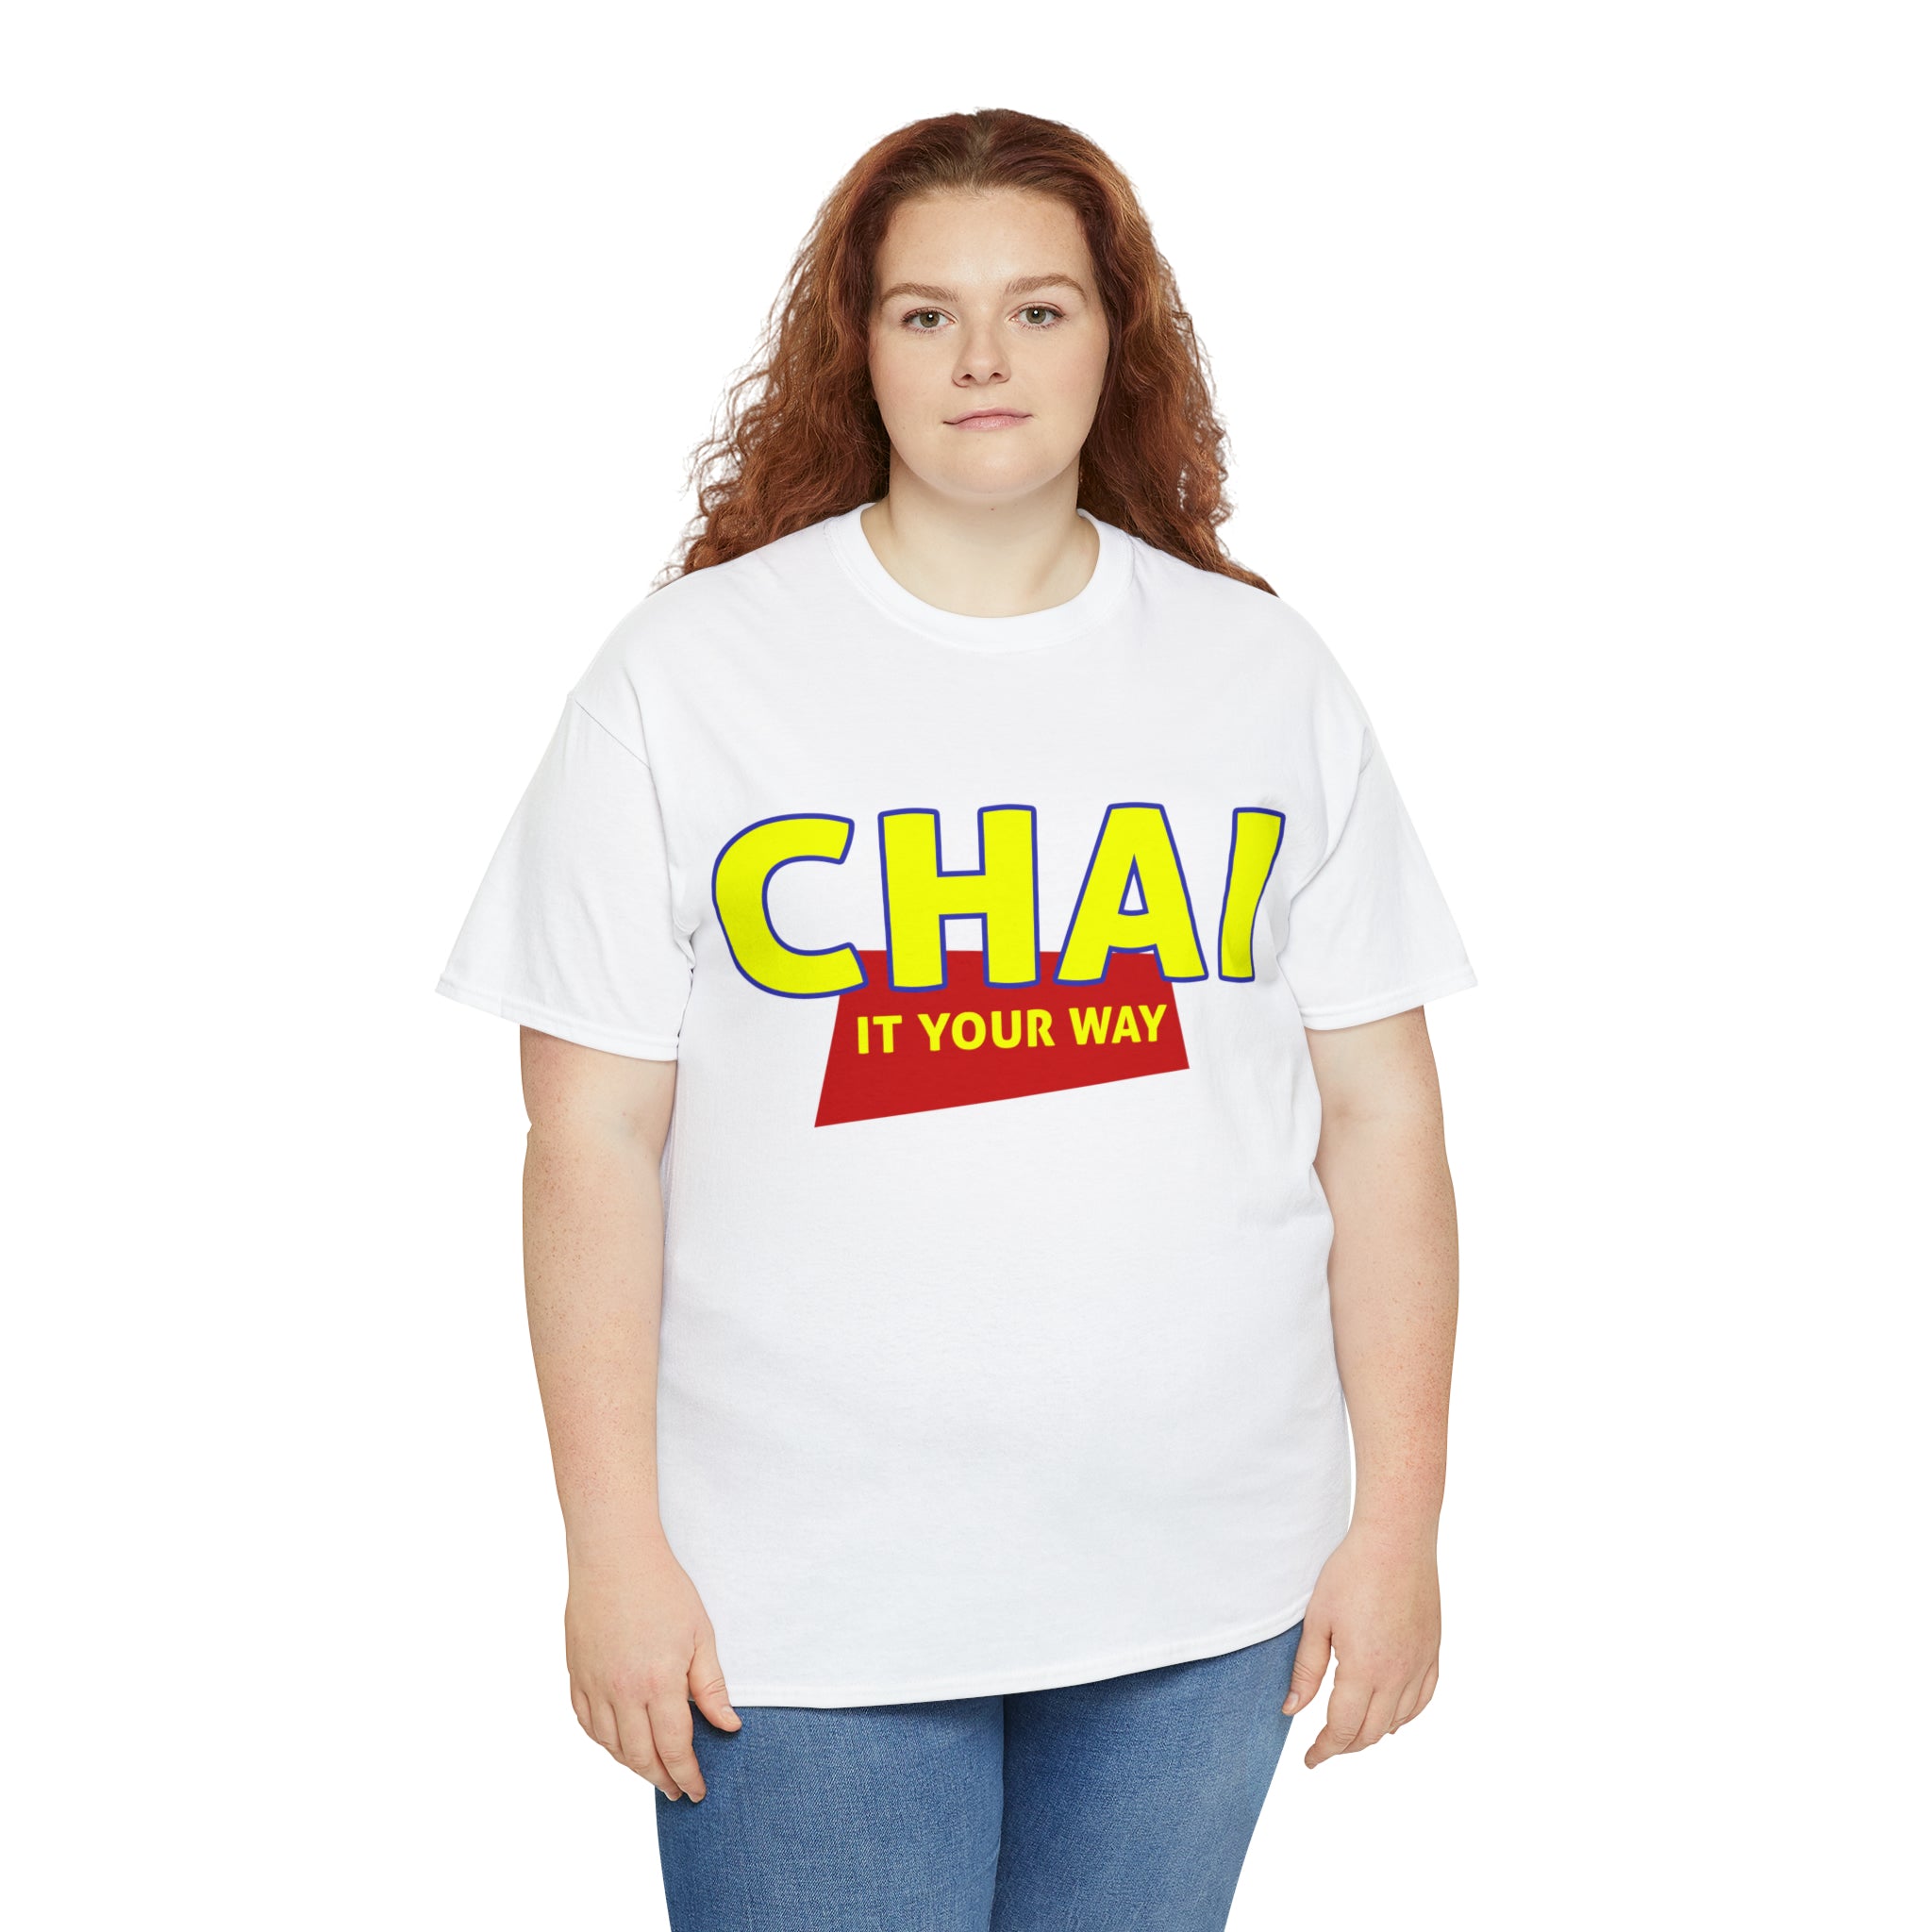 Chai It Your Way T-Shirt Design by C&C